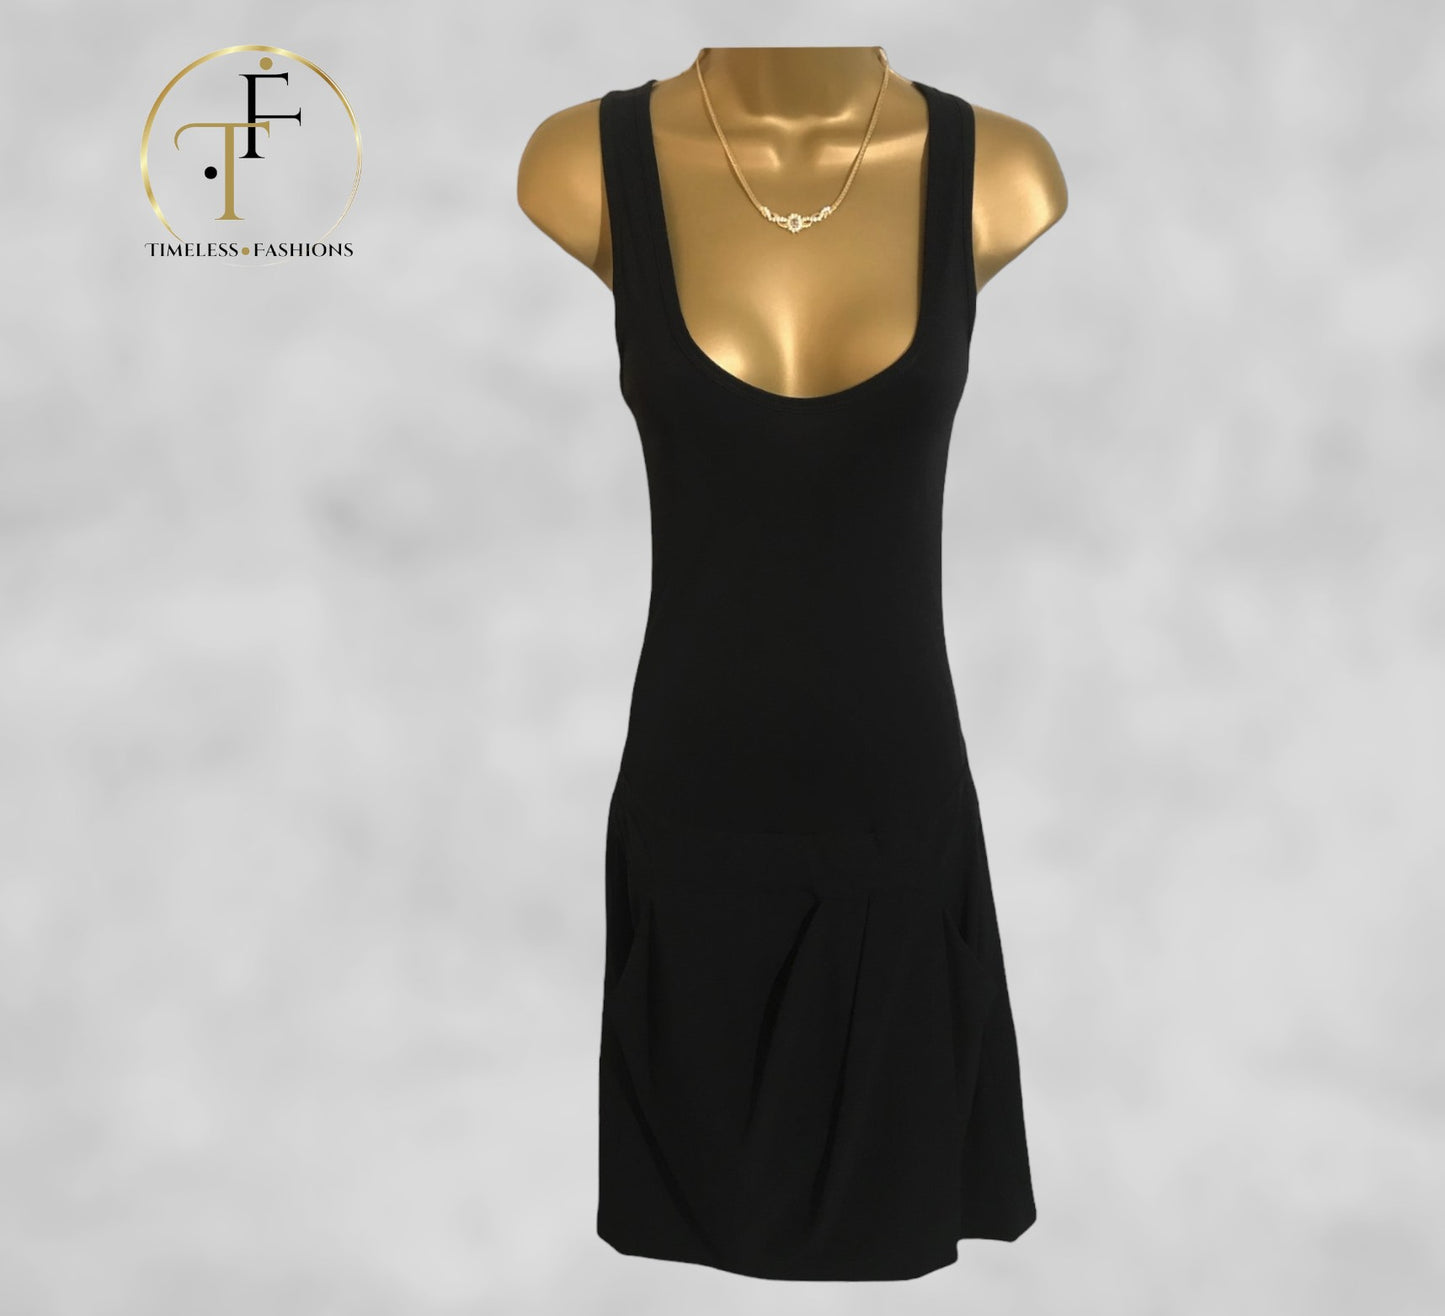 DKNY Donna Karan Women's Black Drop Waist Wool Dress UK 8 US 4 EU 36 Timeless Fashions